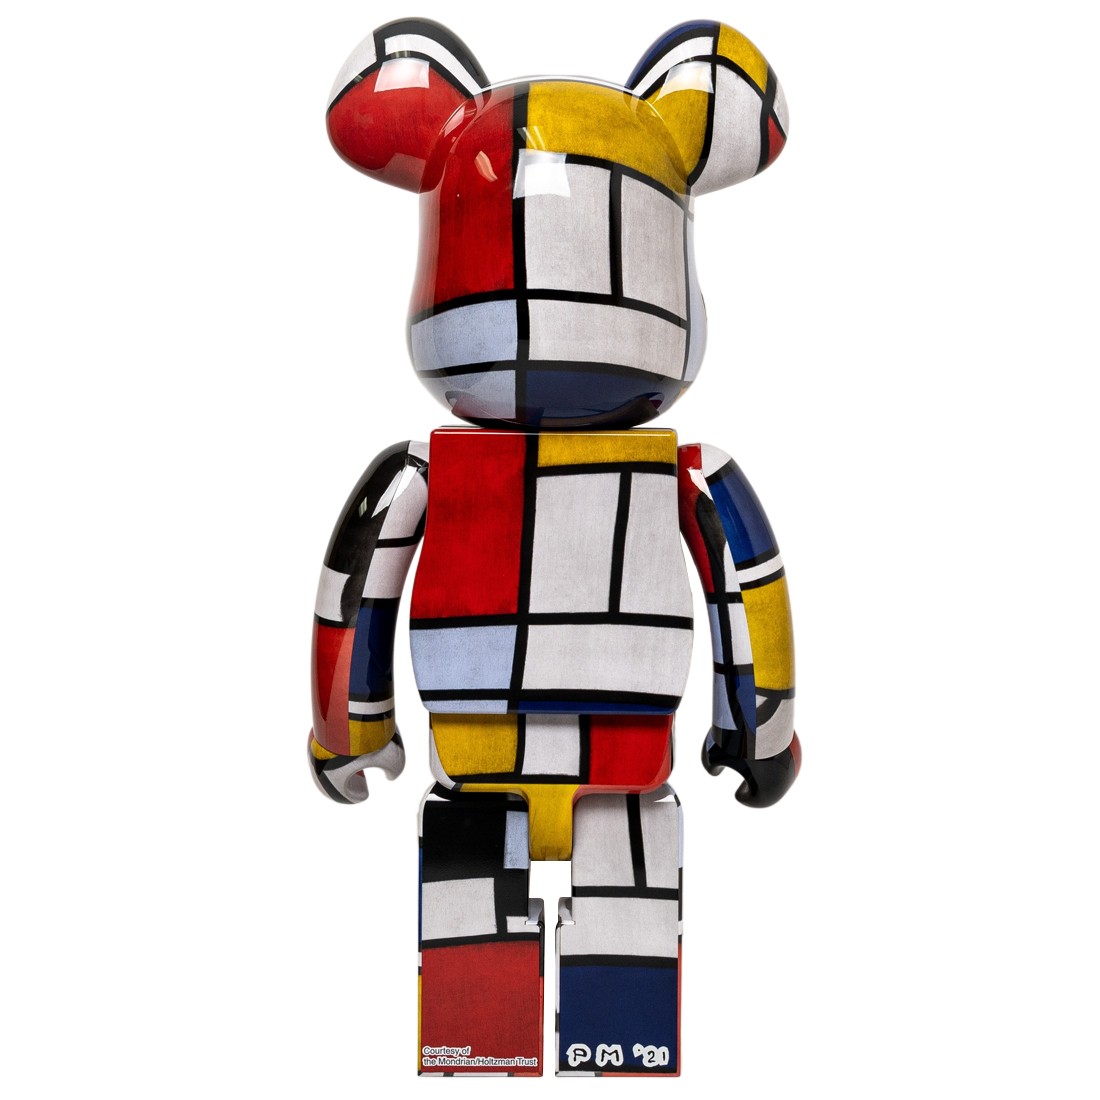 Medicom Piet Mondrian 1000% Bearbrick Figure white